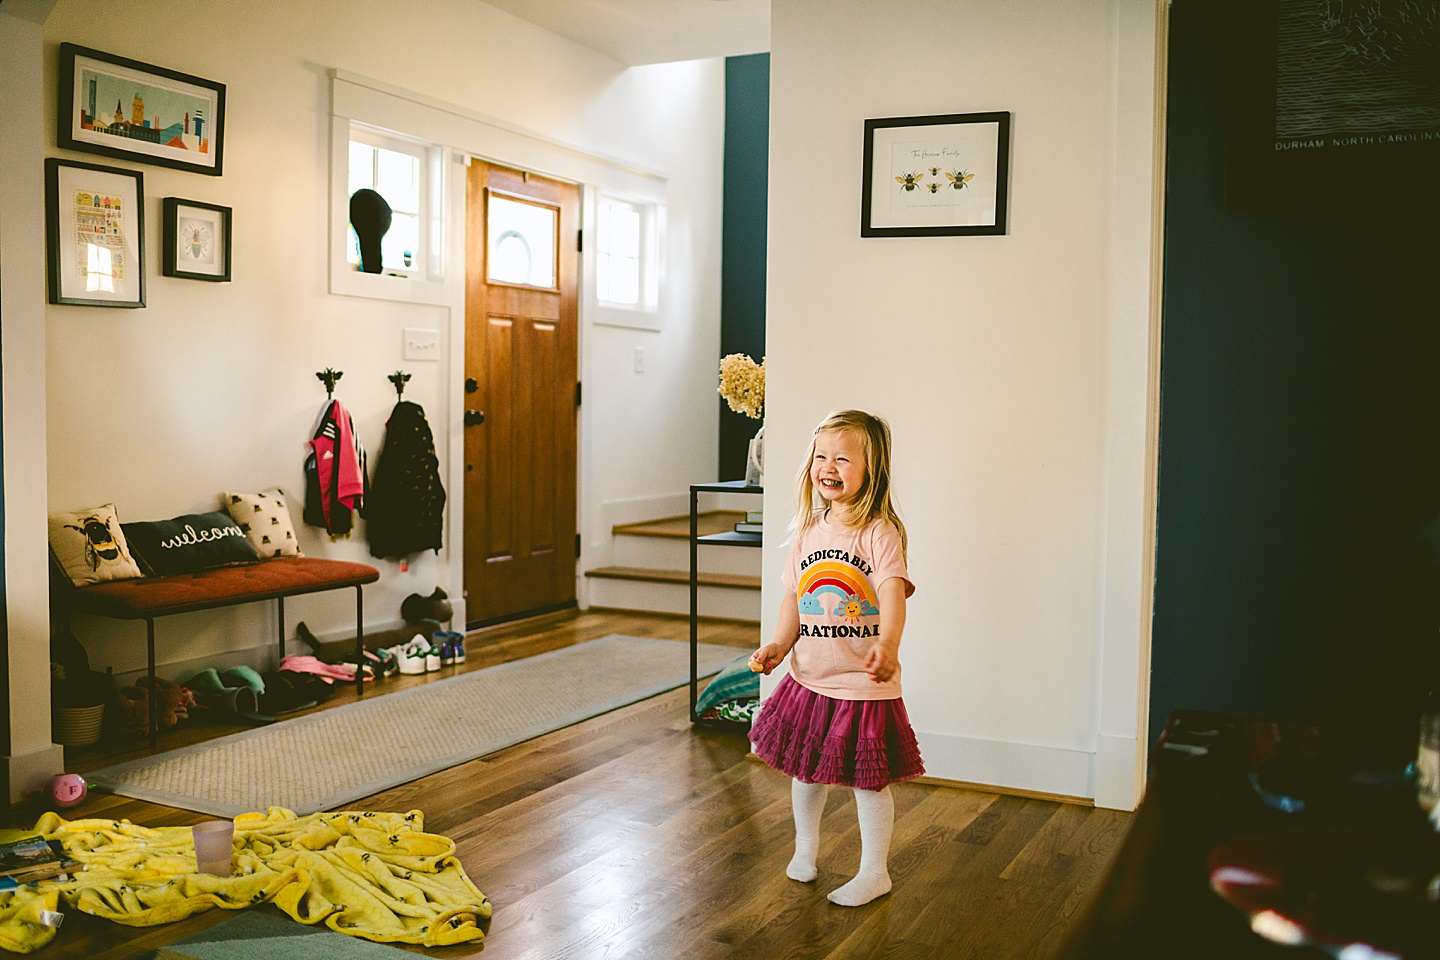 Little girl dancing in living room